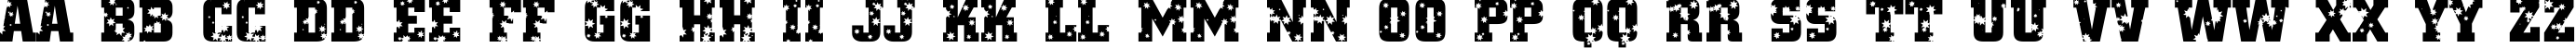 Пример написания английского алфавита шрифтом a_CityNovaTitulStars